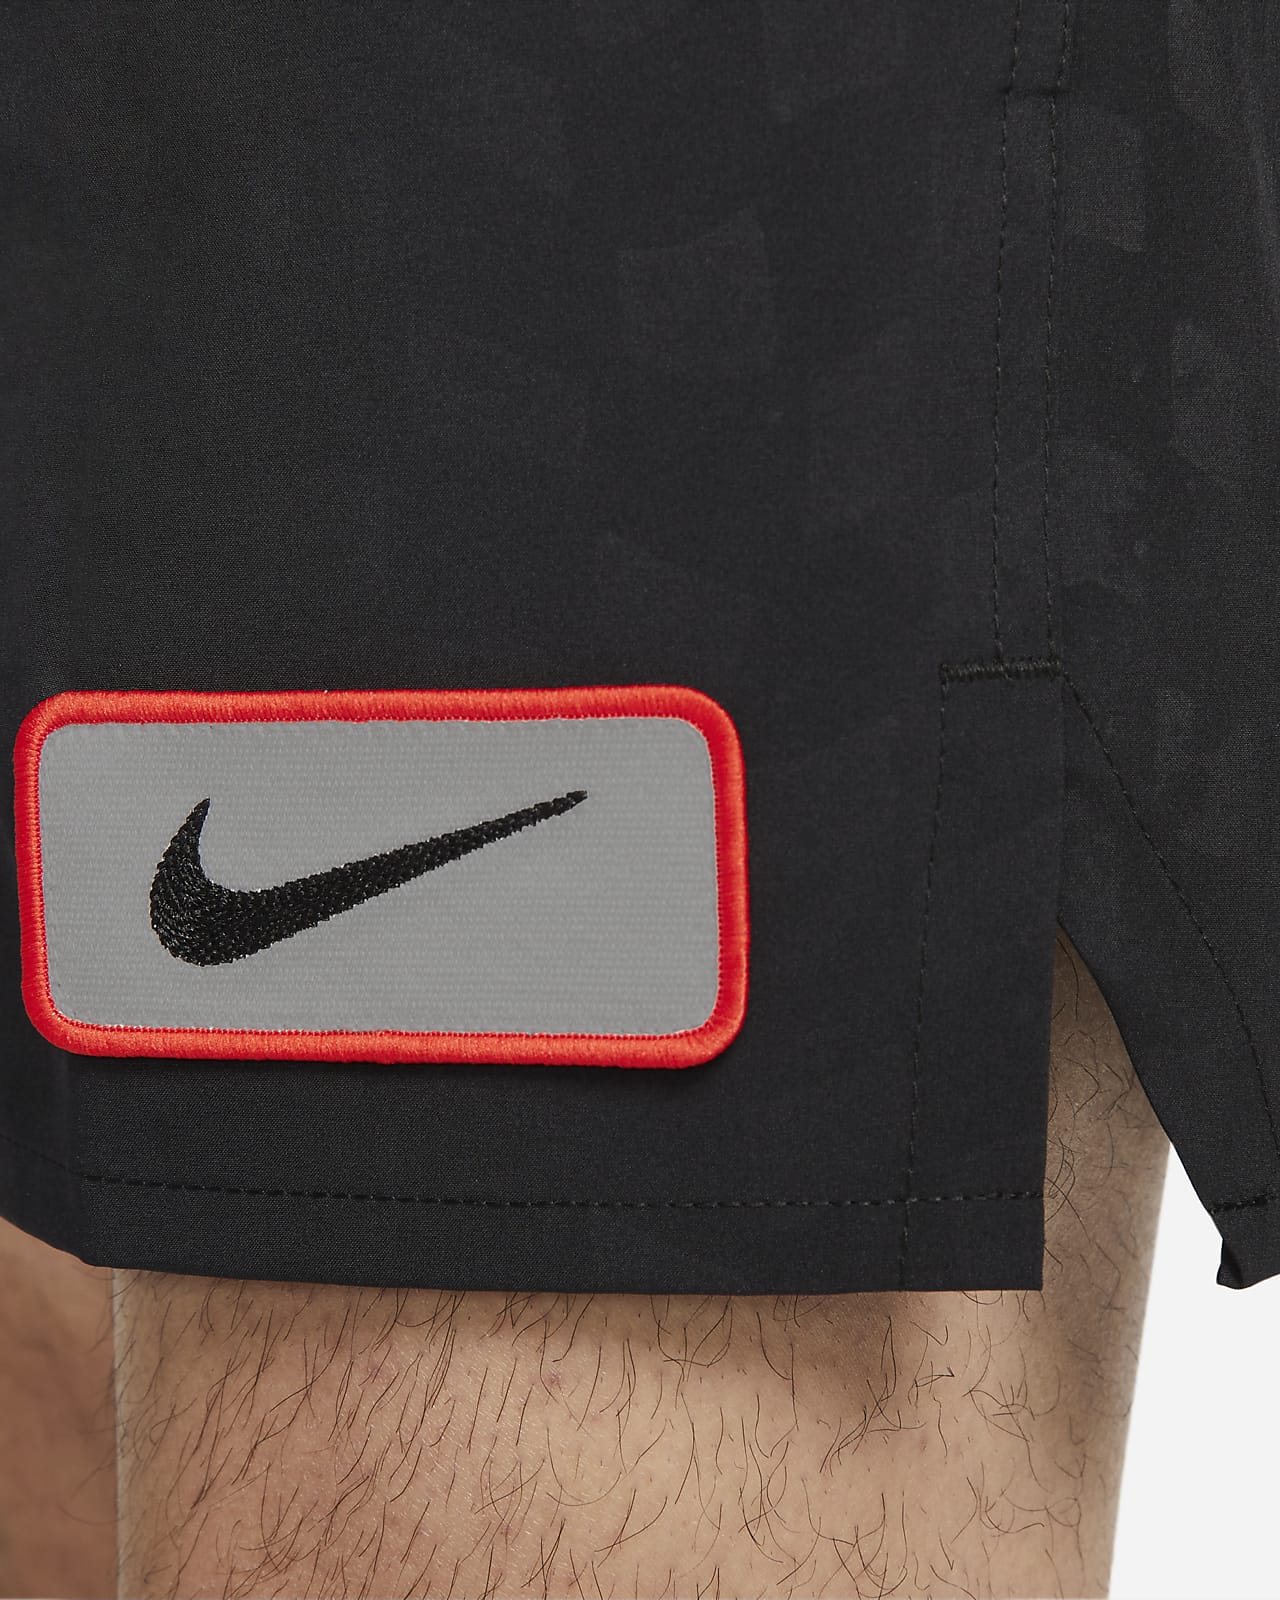 Nike Dri-FIT Flex 9” Woven Fitness Shorts, Shorts